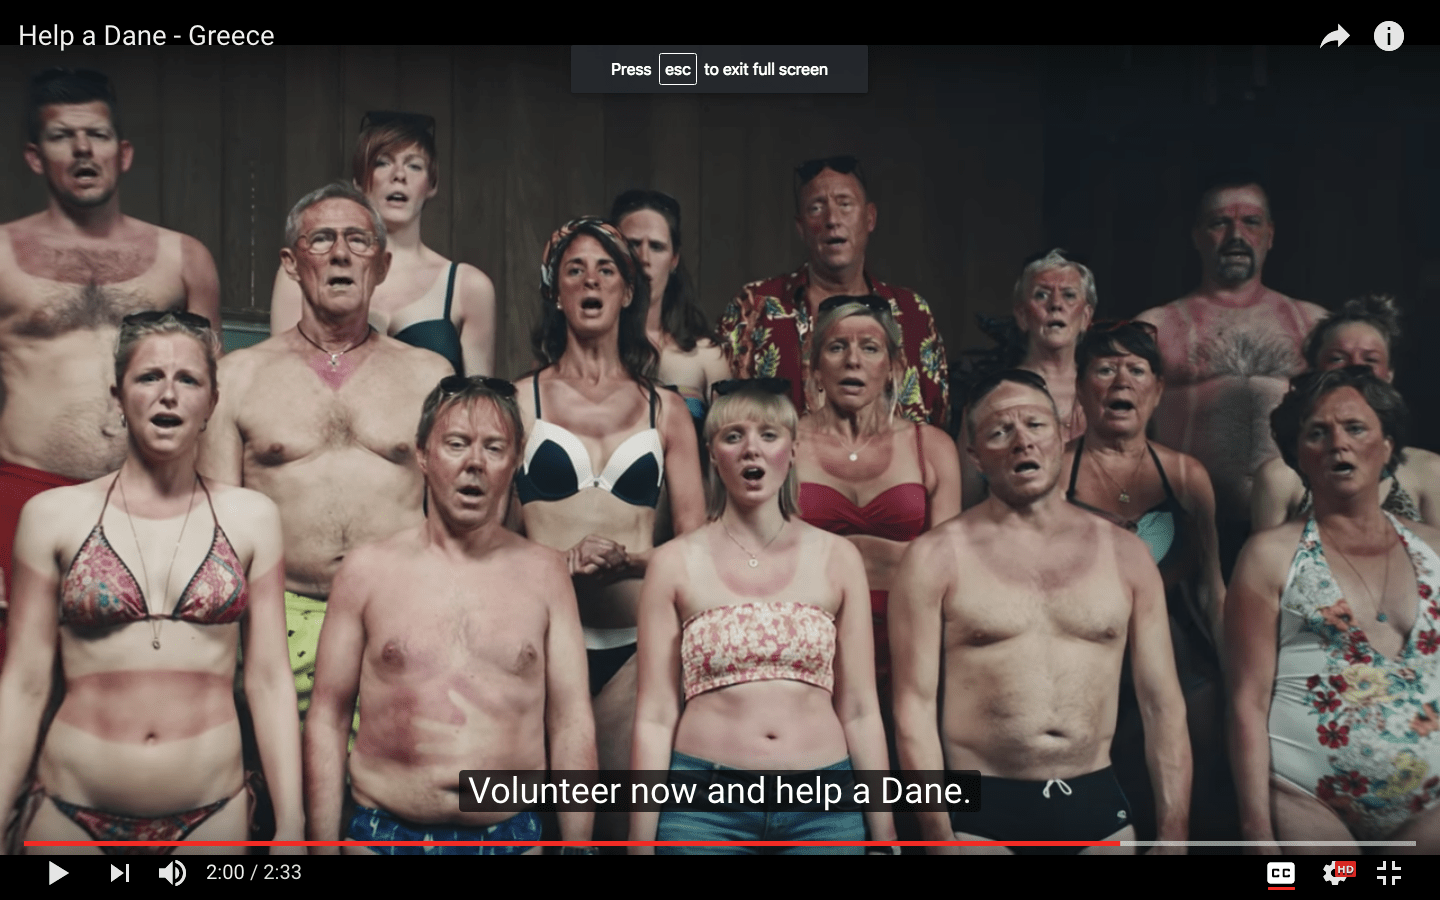 Strange video implores residents of sunny climes to help pale-skinned Danes avoid sunburn